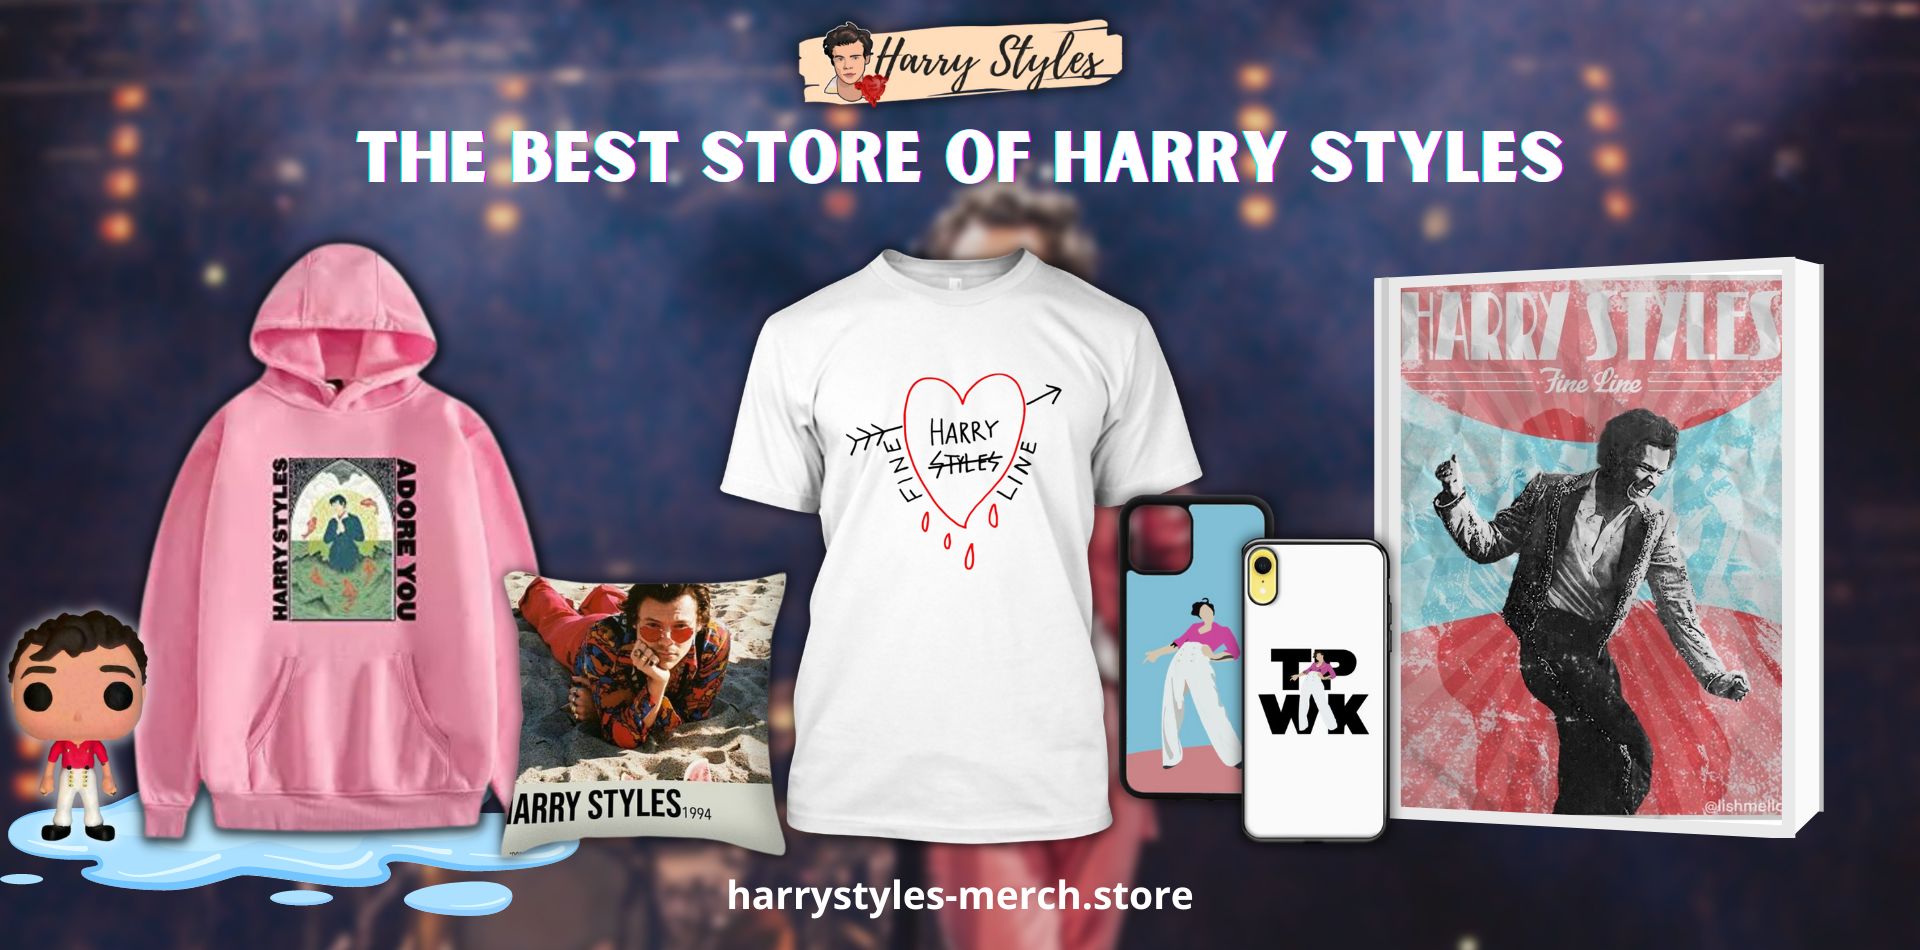 http://harrystyles-merch.store/wp-content/uploads/2022/11/Harry-Styles-Web-Banner-1920x950px.jpg